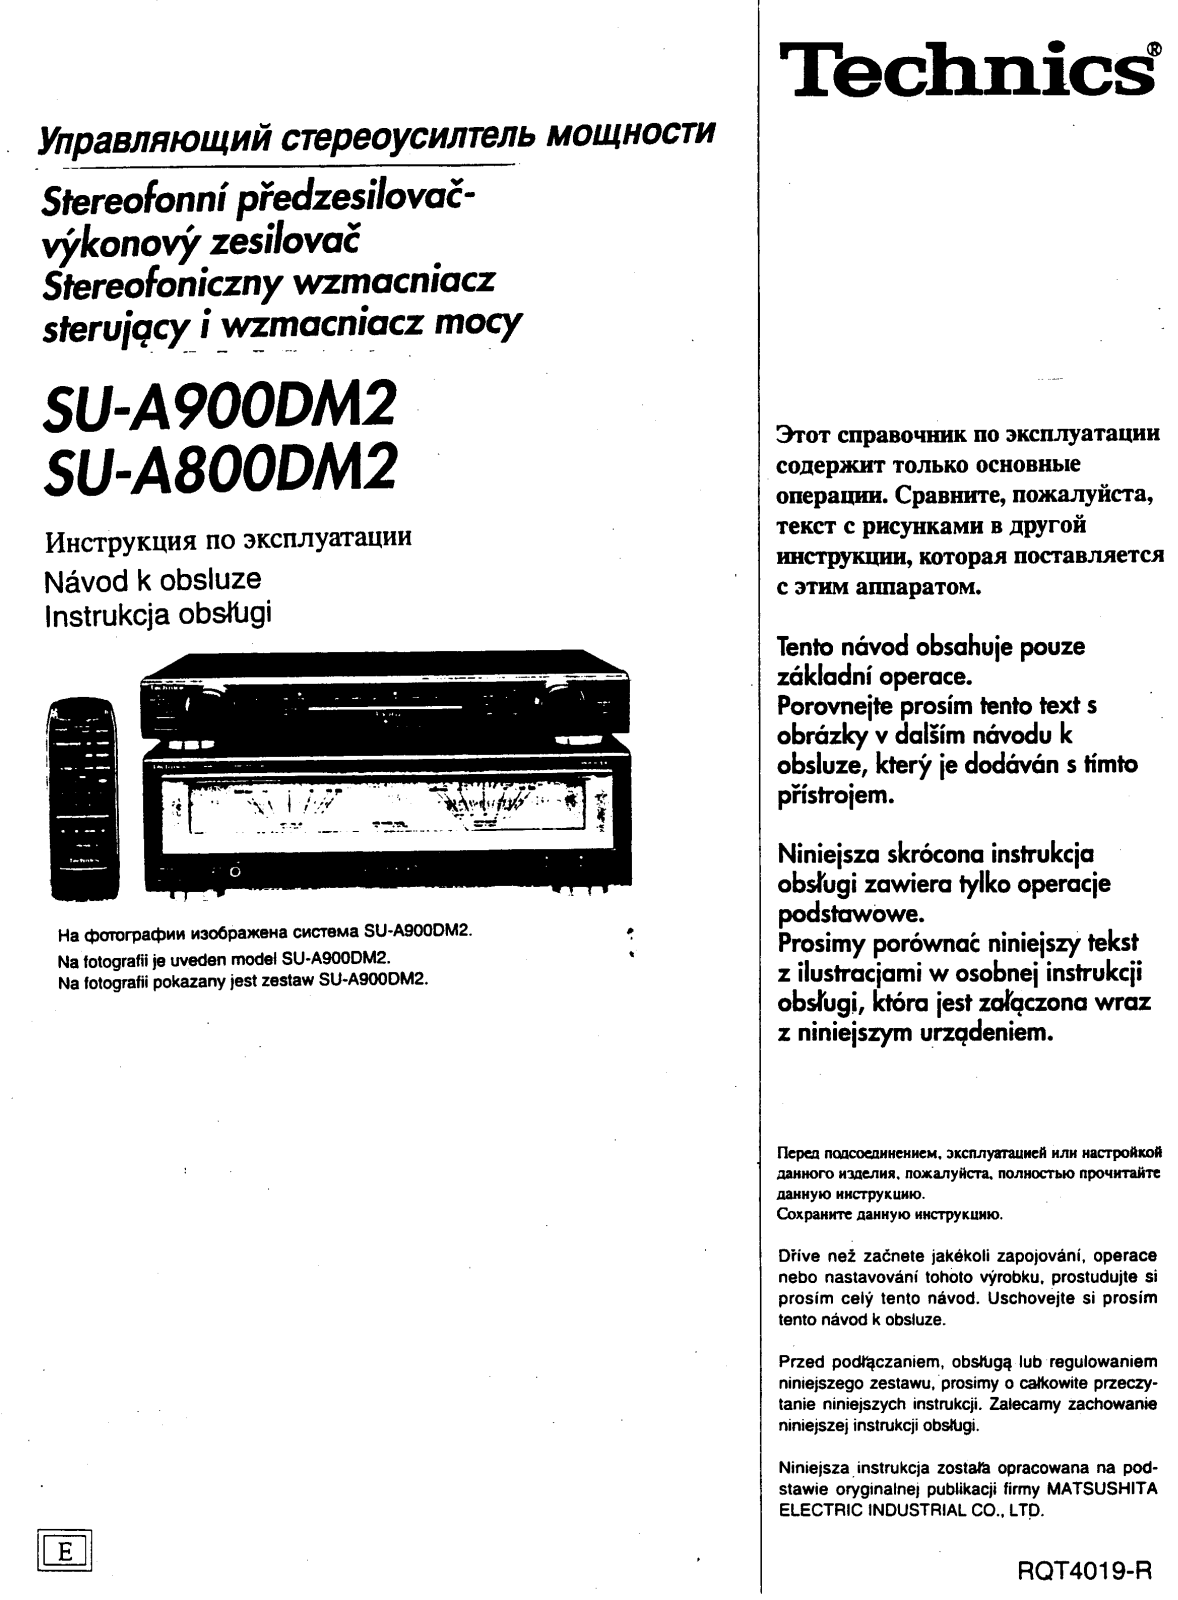 Panasonic SU-A900DM2 User Manual